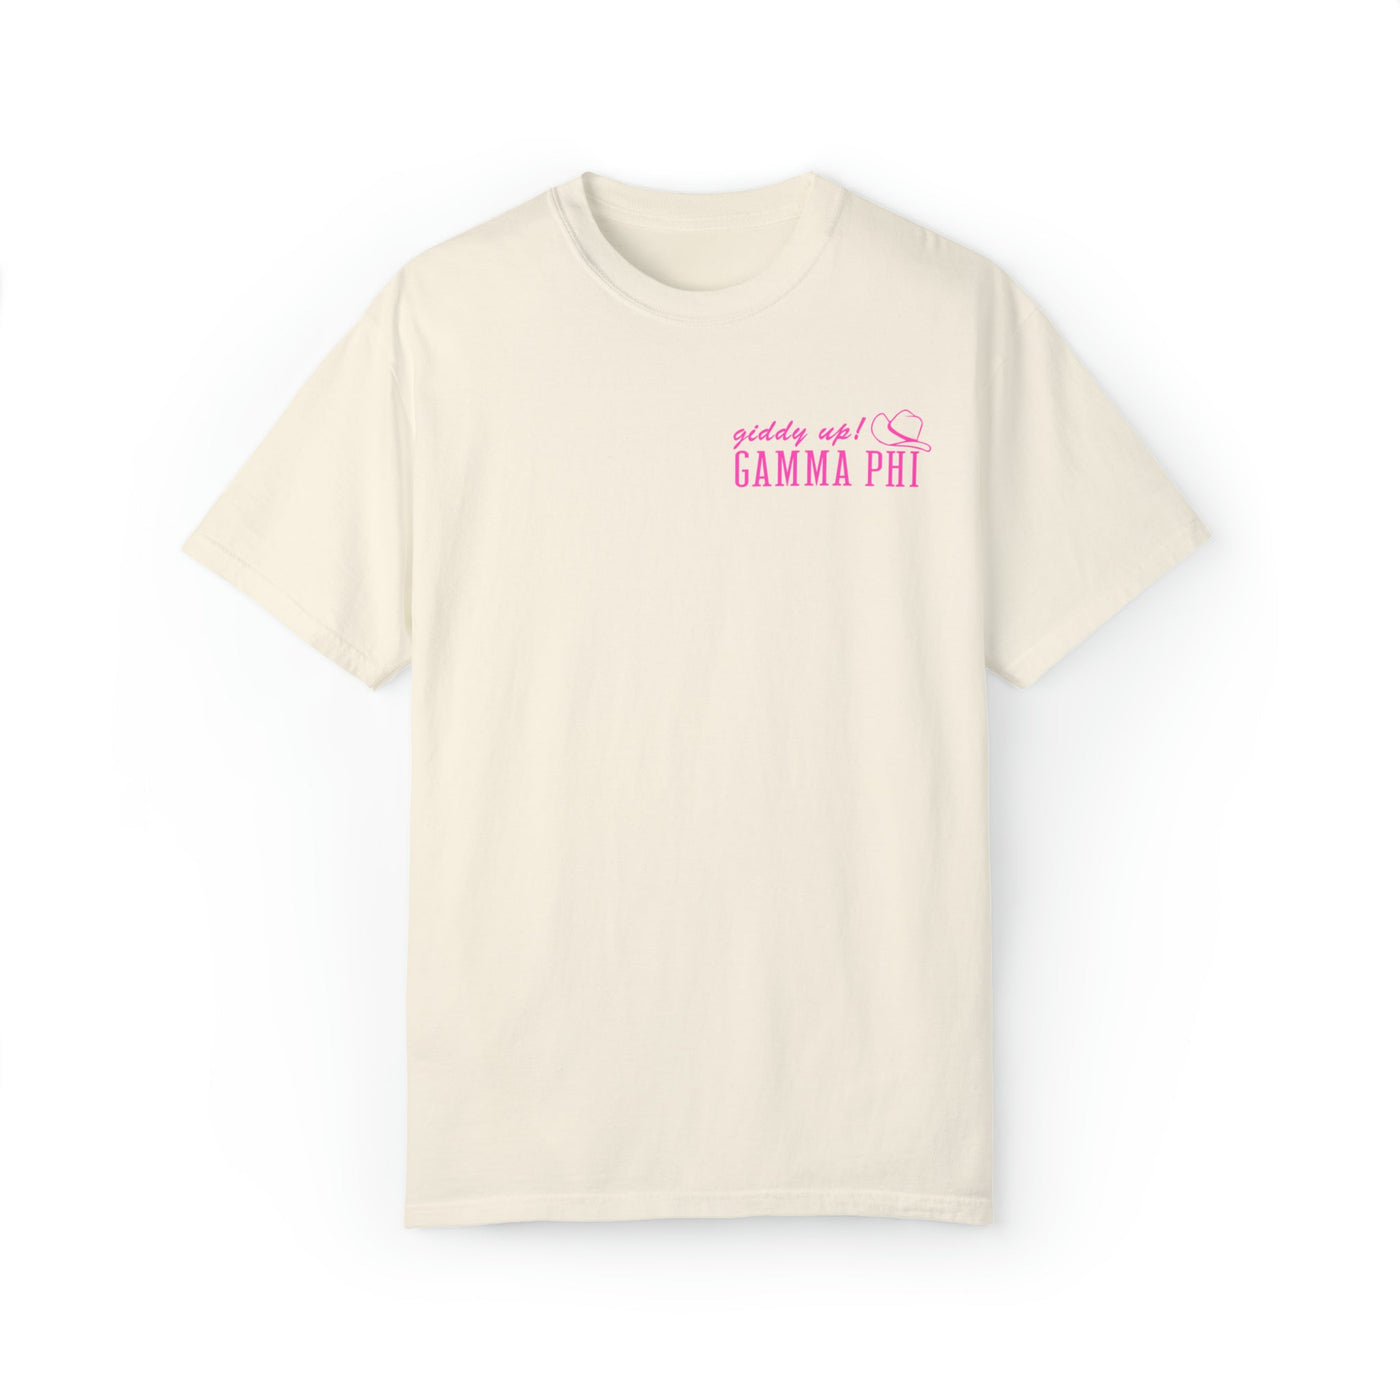 Gamma Phi Beta Country Western Pink Sorority T-shirt